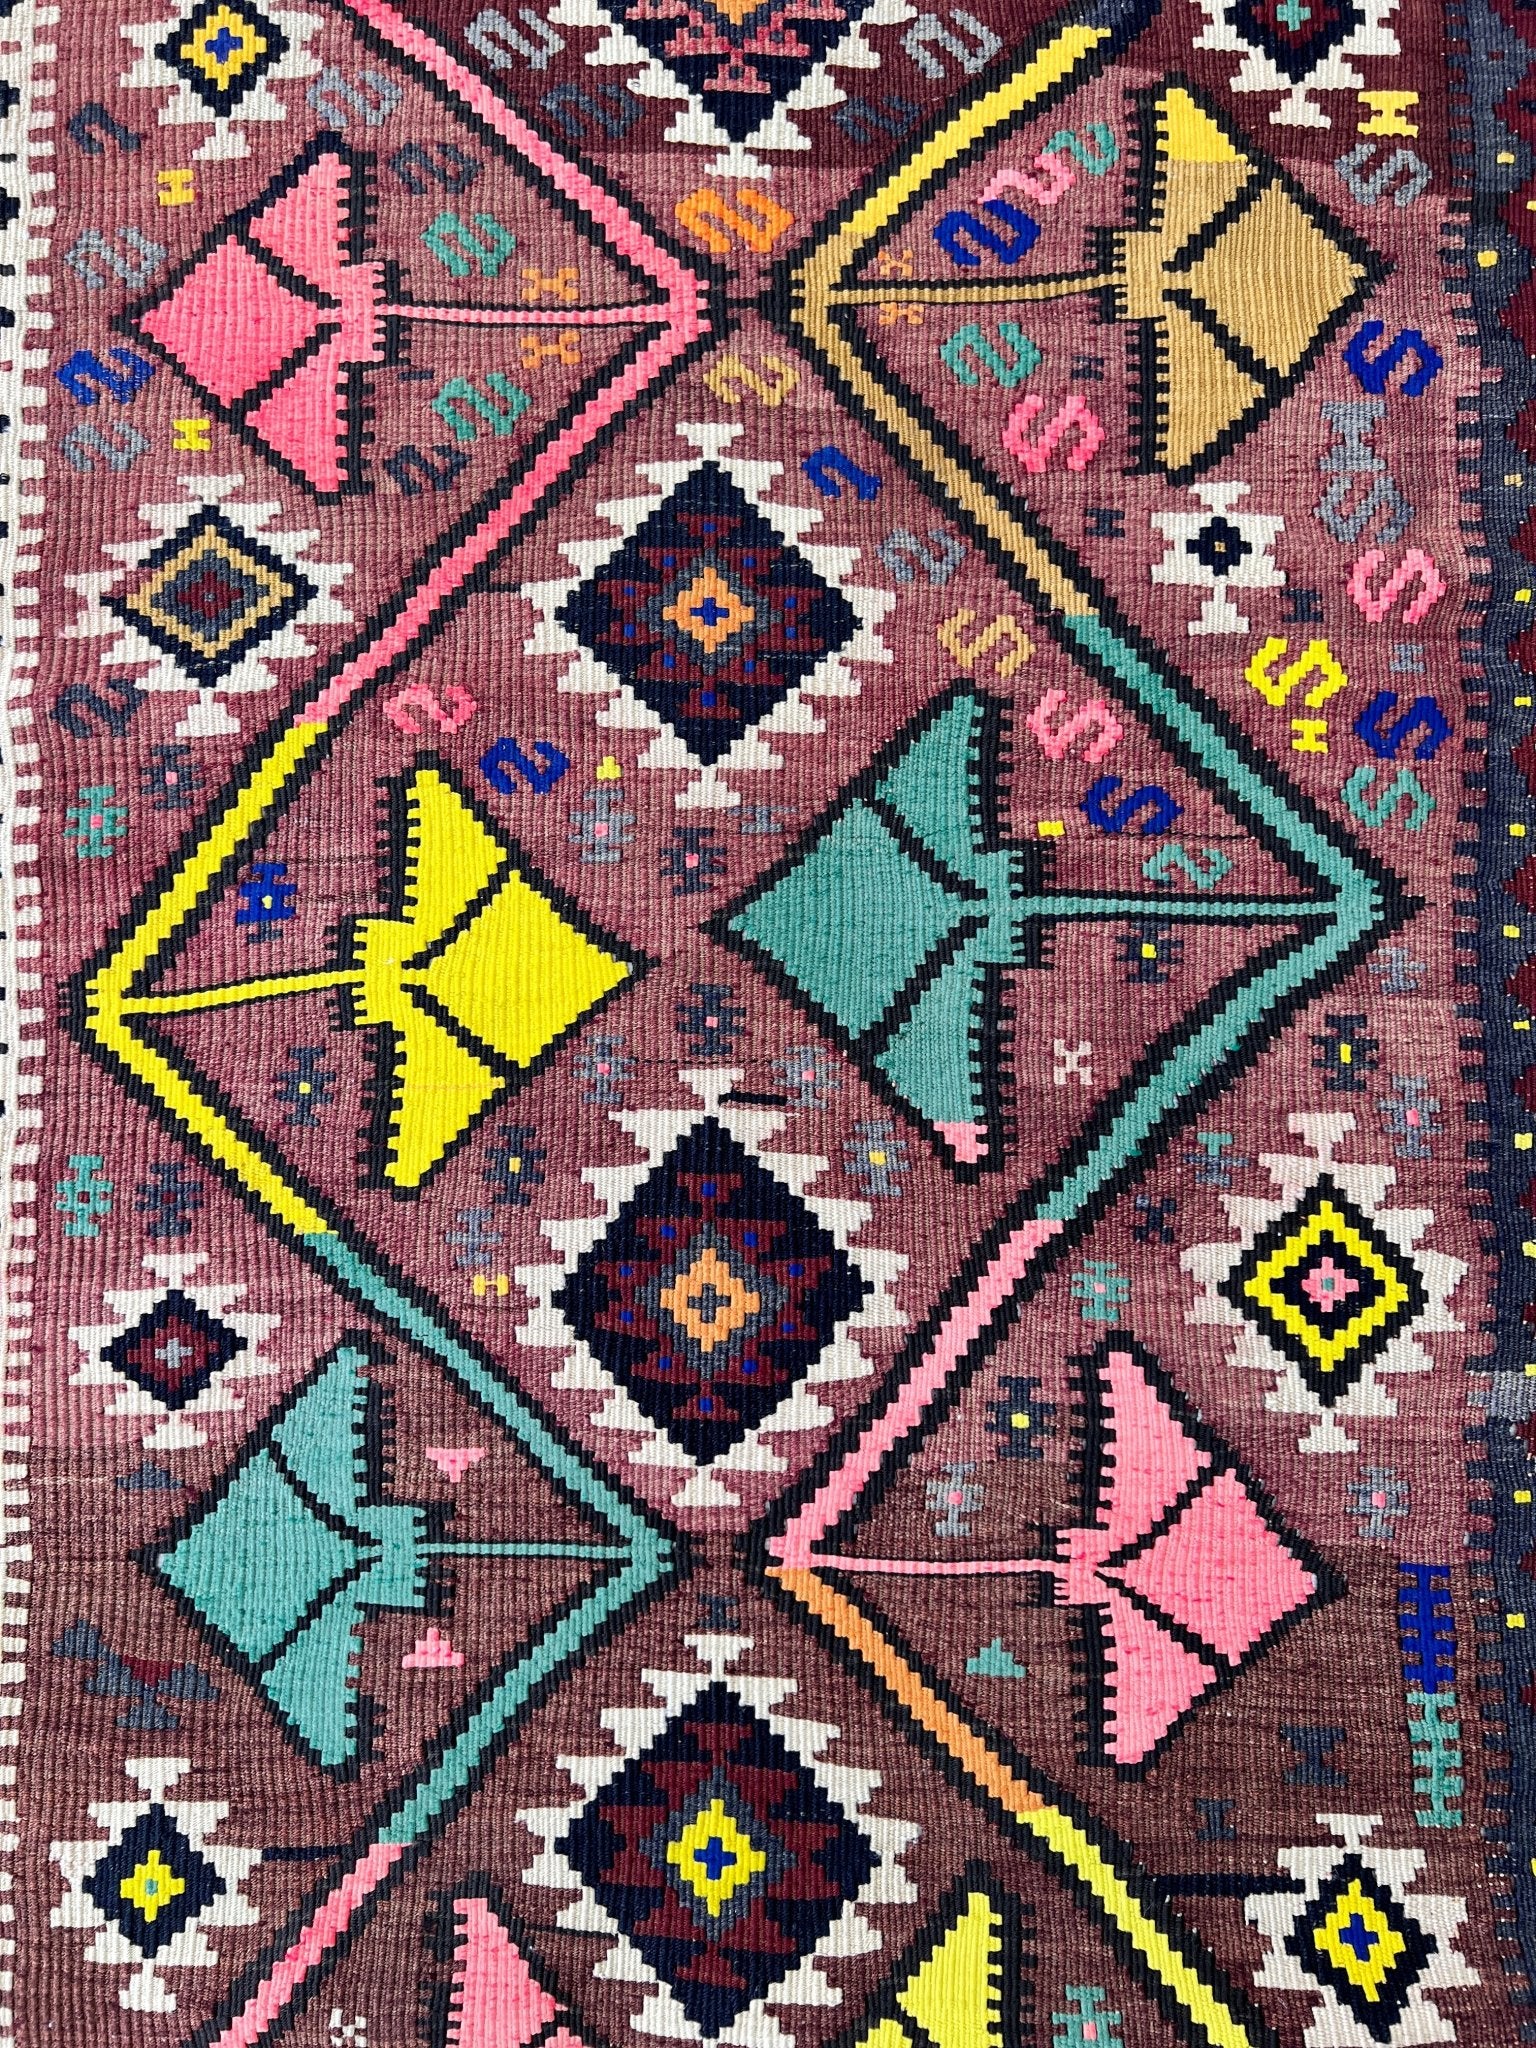 oriental rug san francisco turkish kilim runner rug shopping palo alto vintage rug store berkeley palo alto